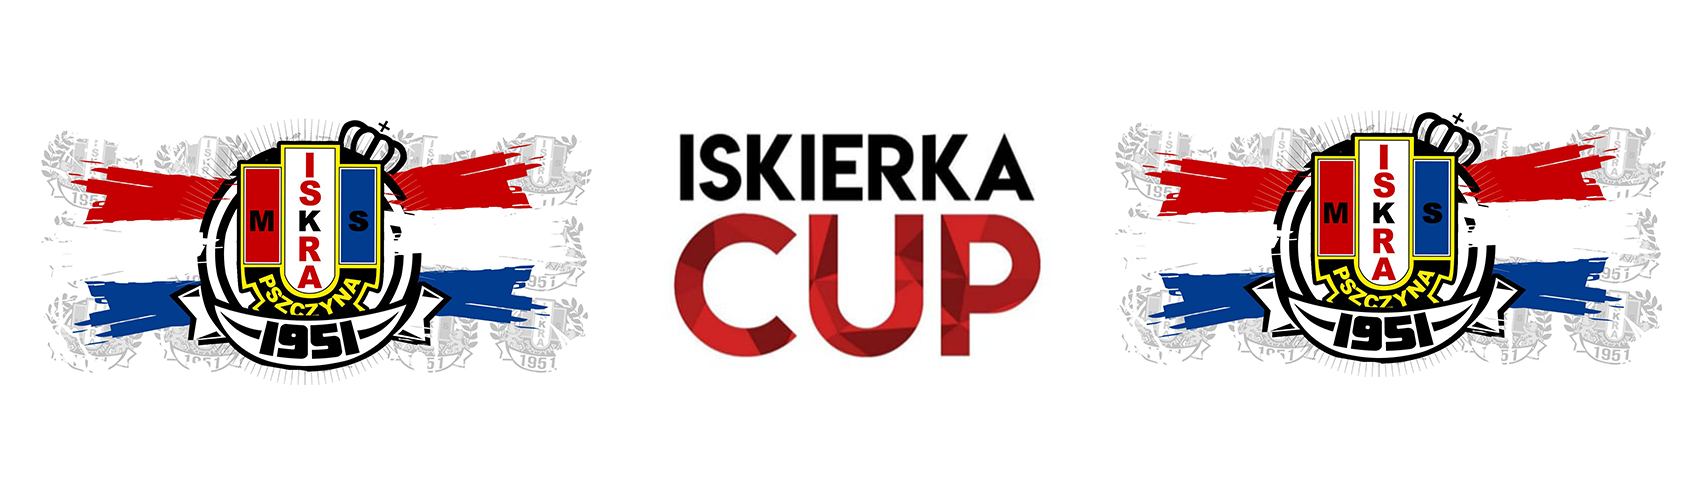 Iskierka CUP - baner z logotypami